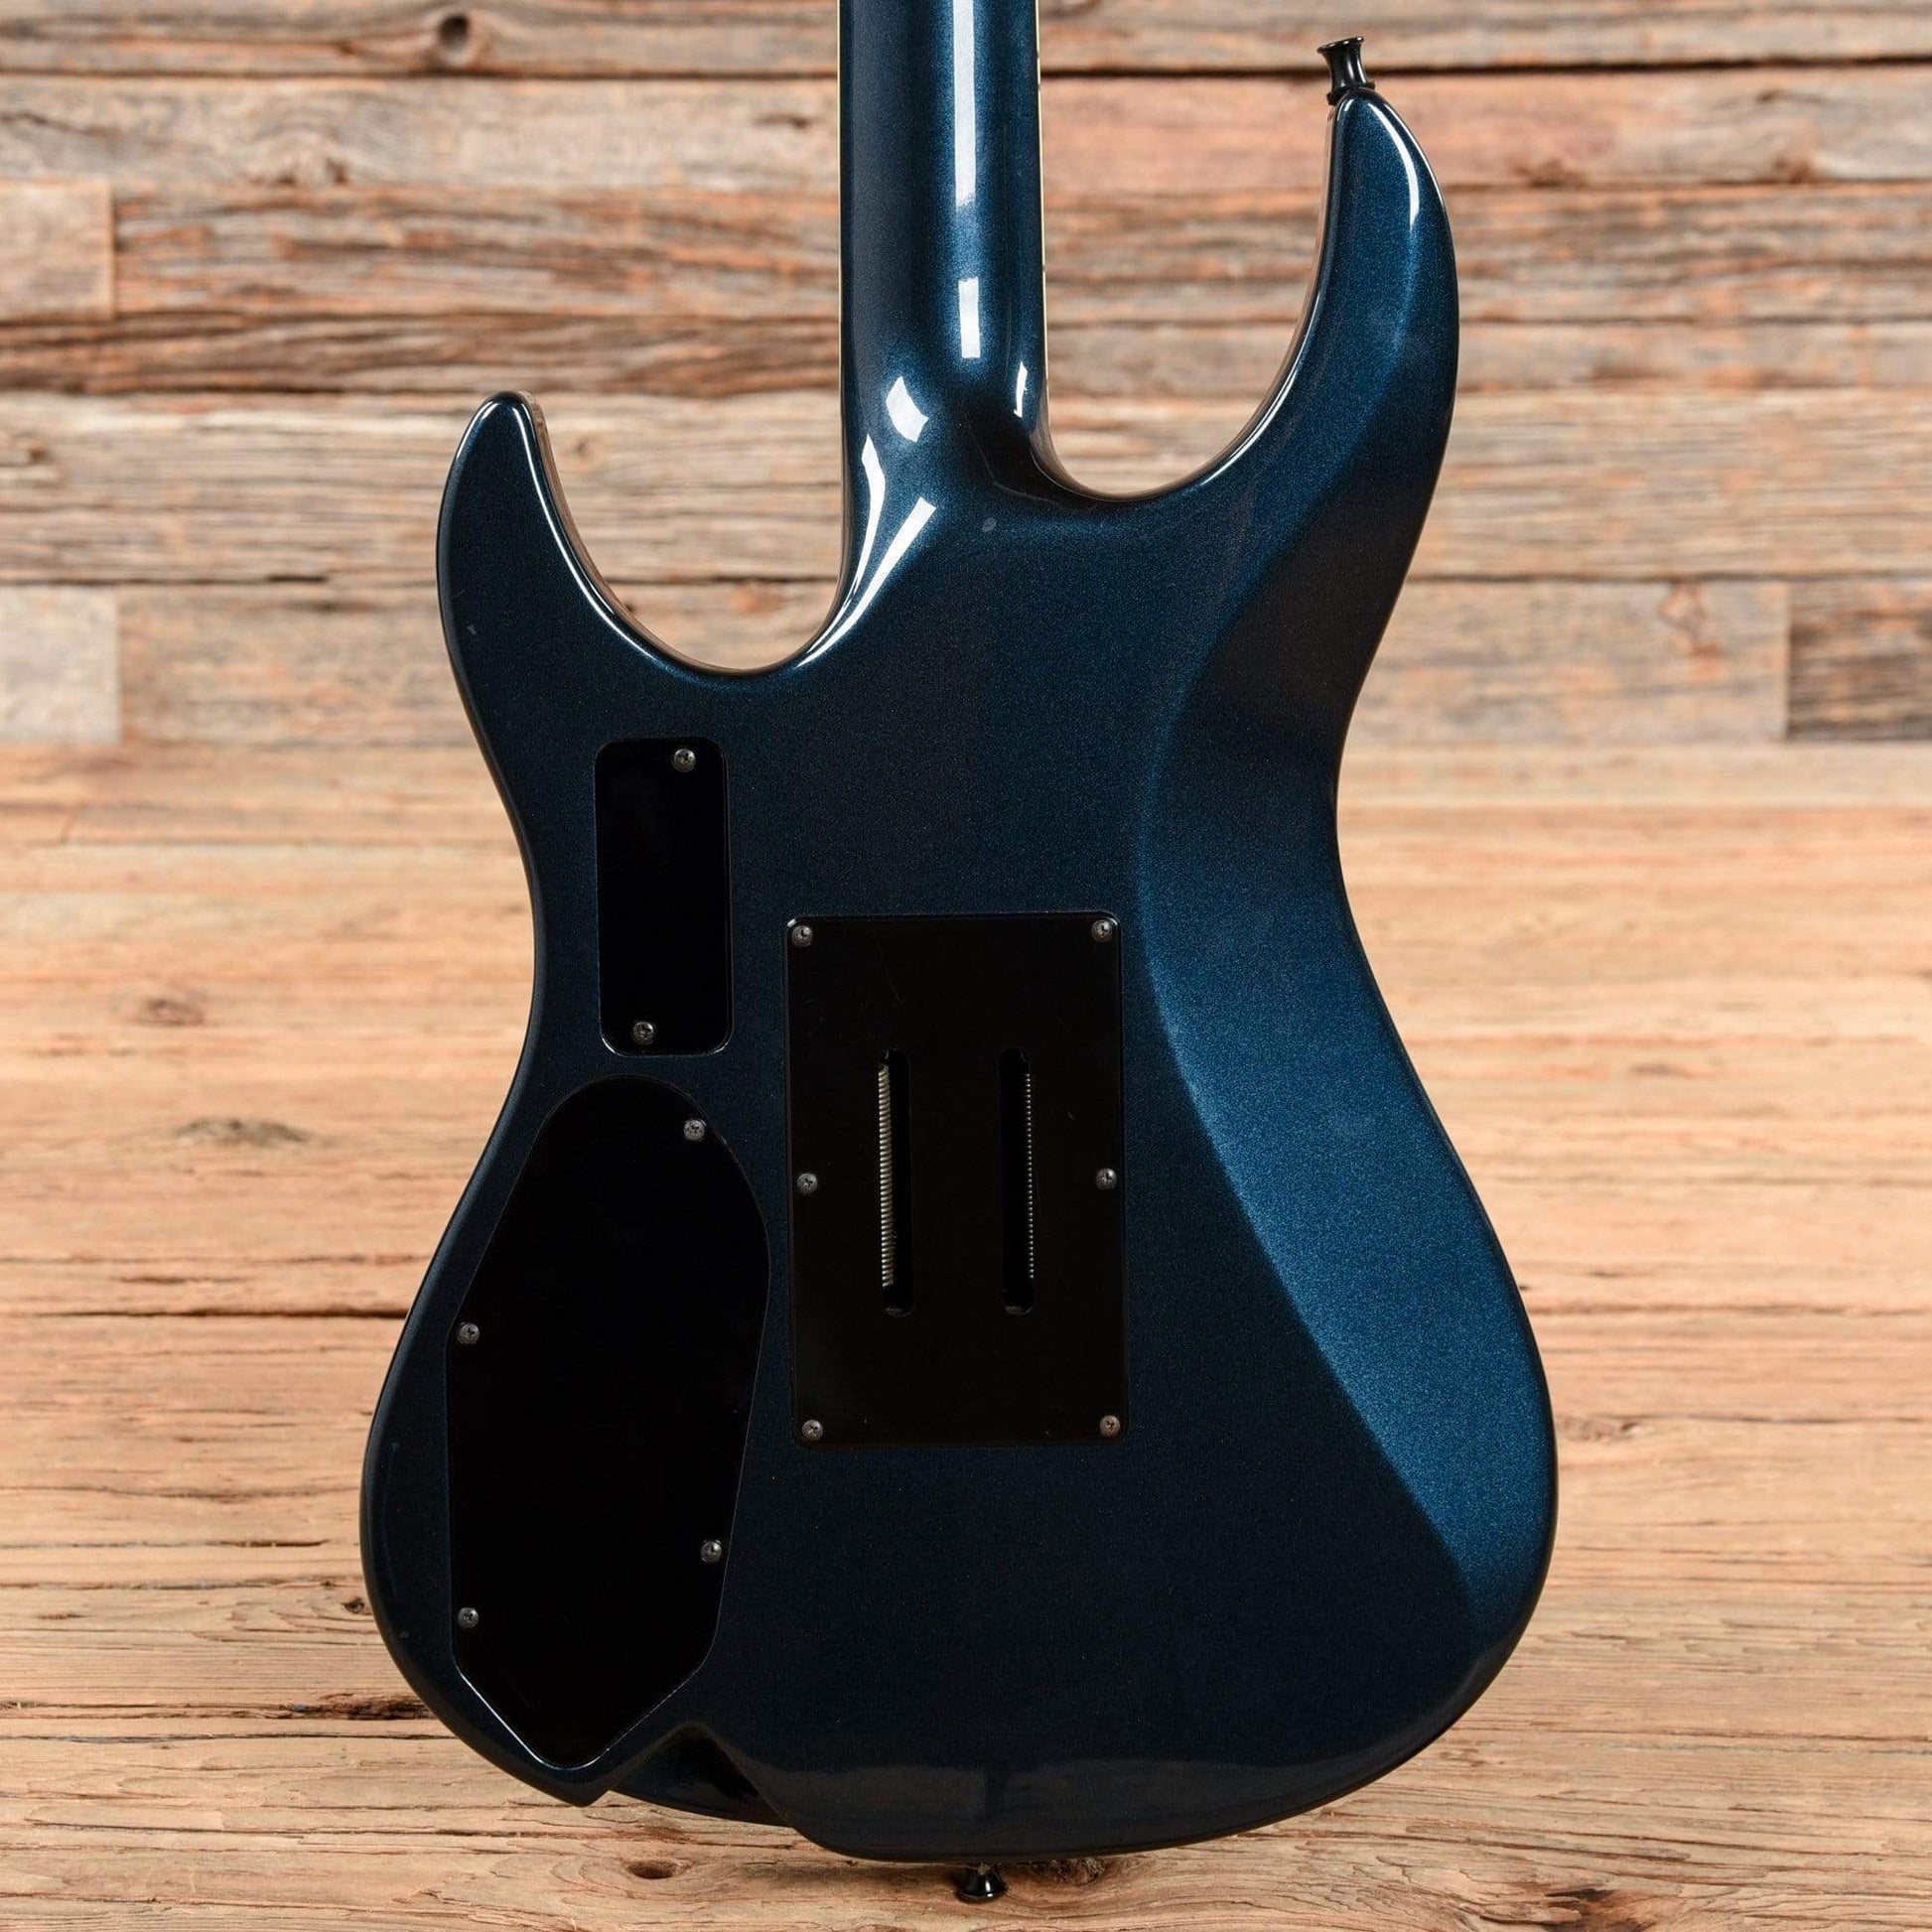 Yamaha RGX 1212A Gun Metallic Blue Electric Guitars / Solid Body